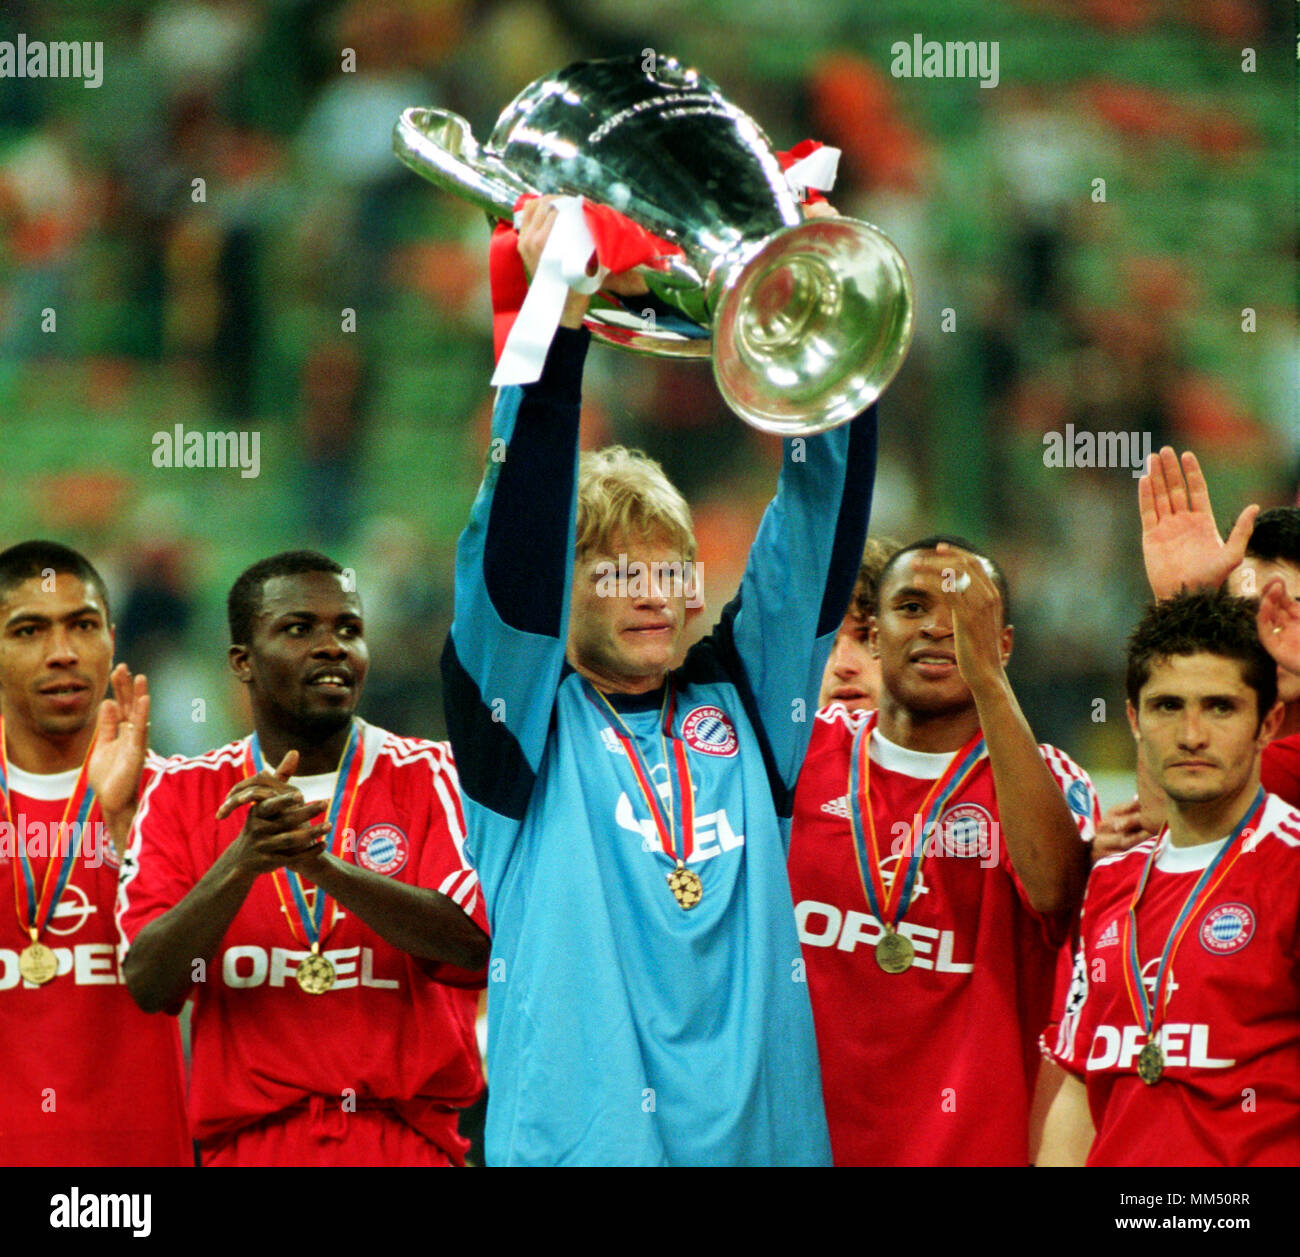 2001 uefa champions league final